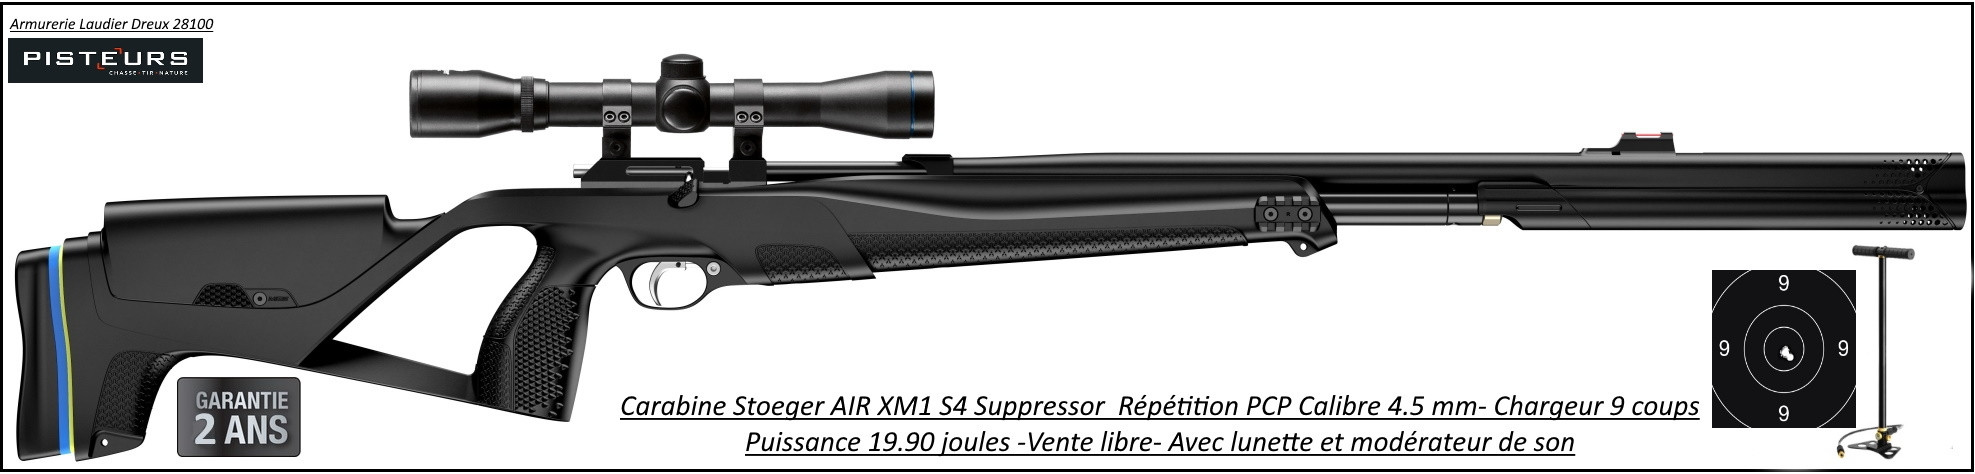 Carabine Stoeger Air PCP XM1 -S4 Suppressor Calibre 4.5mm 19,90 joules pack lunette -Promotion-Ref stoeger-XM1-S4-PCP-combo